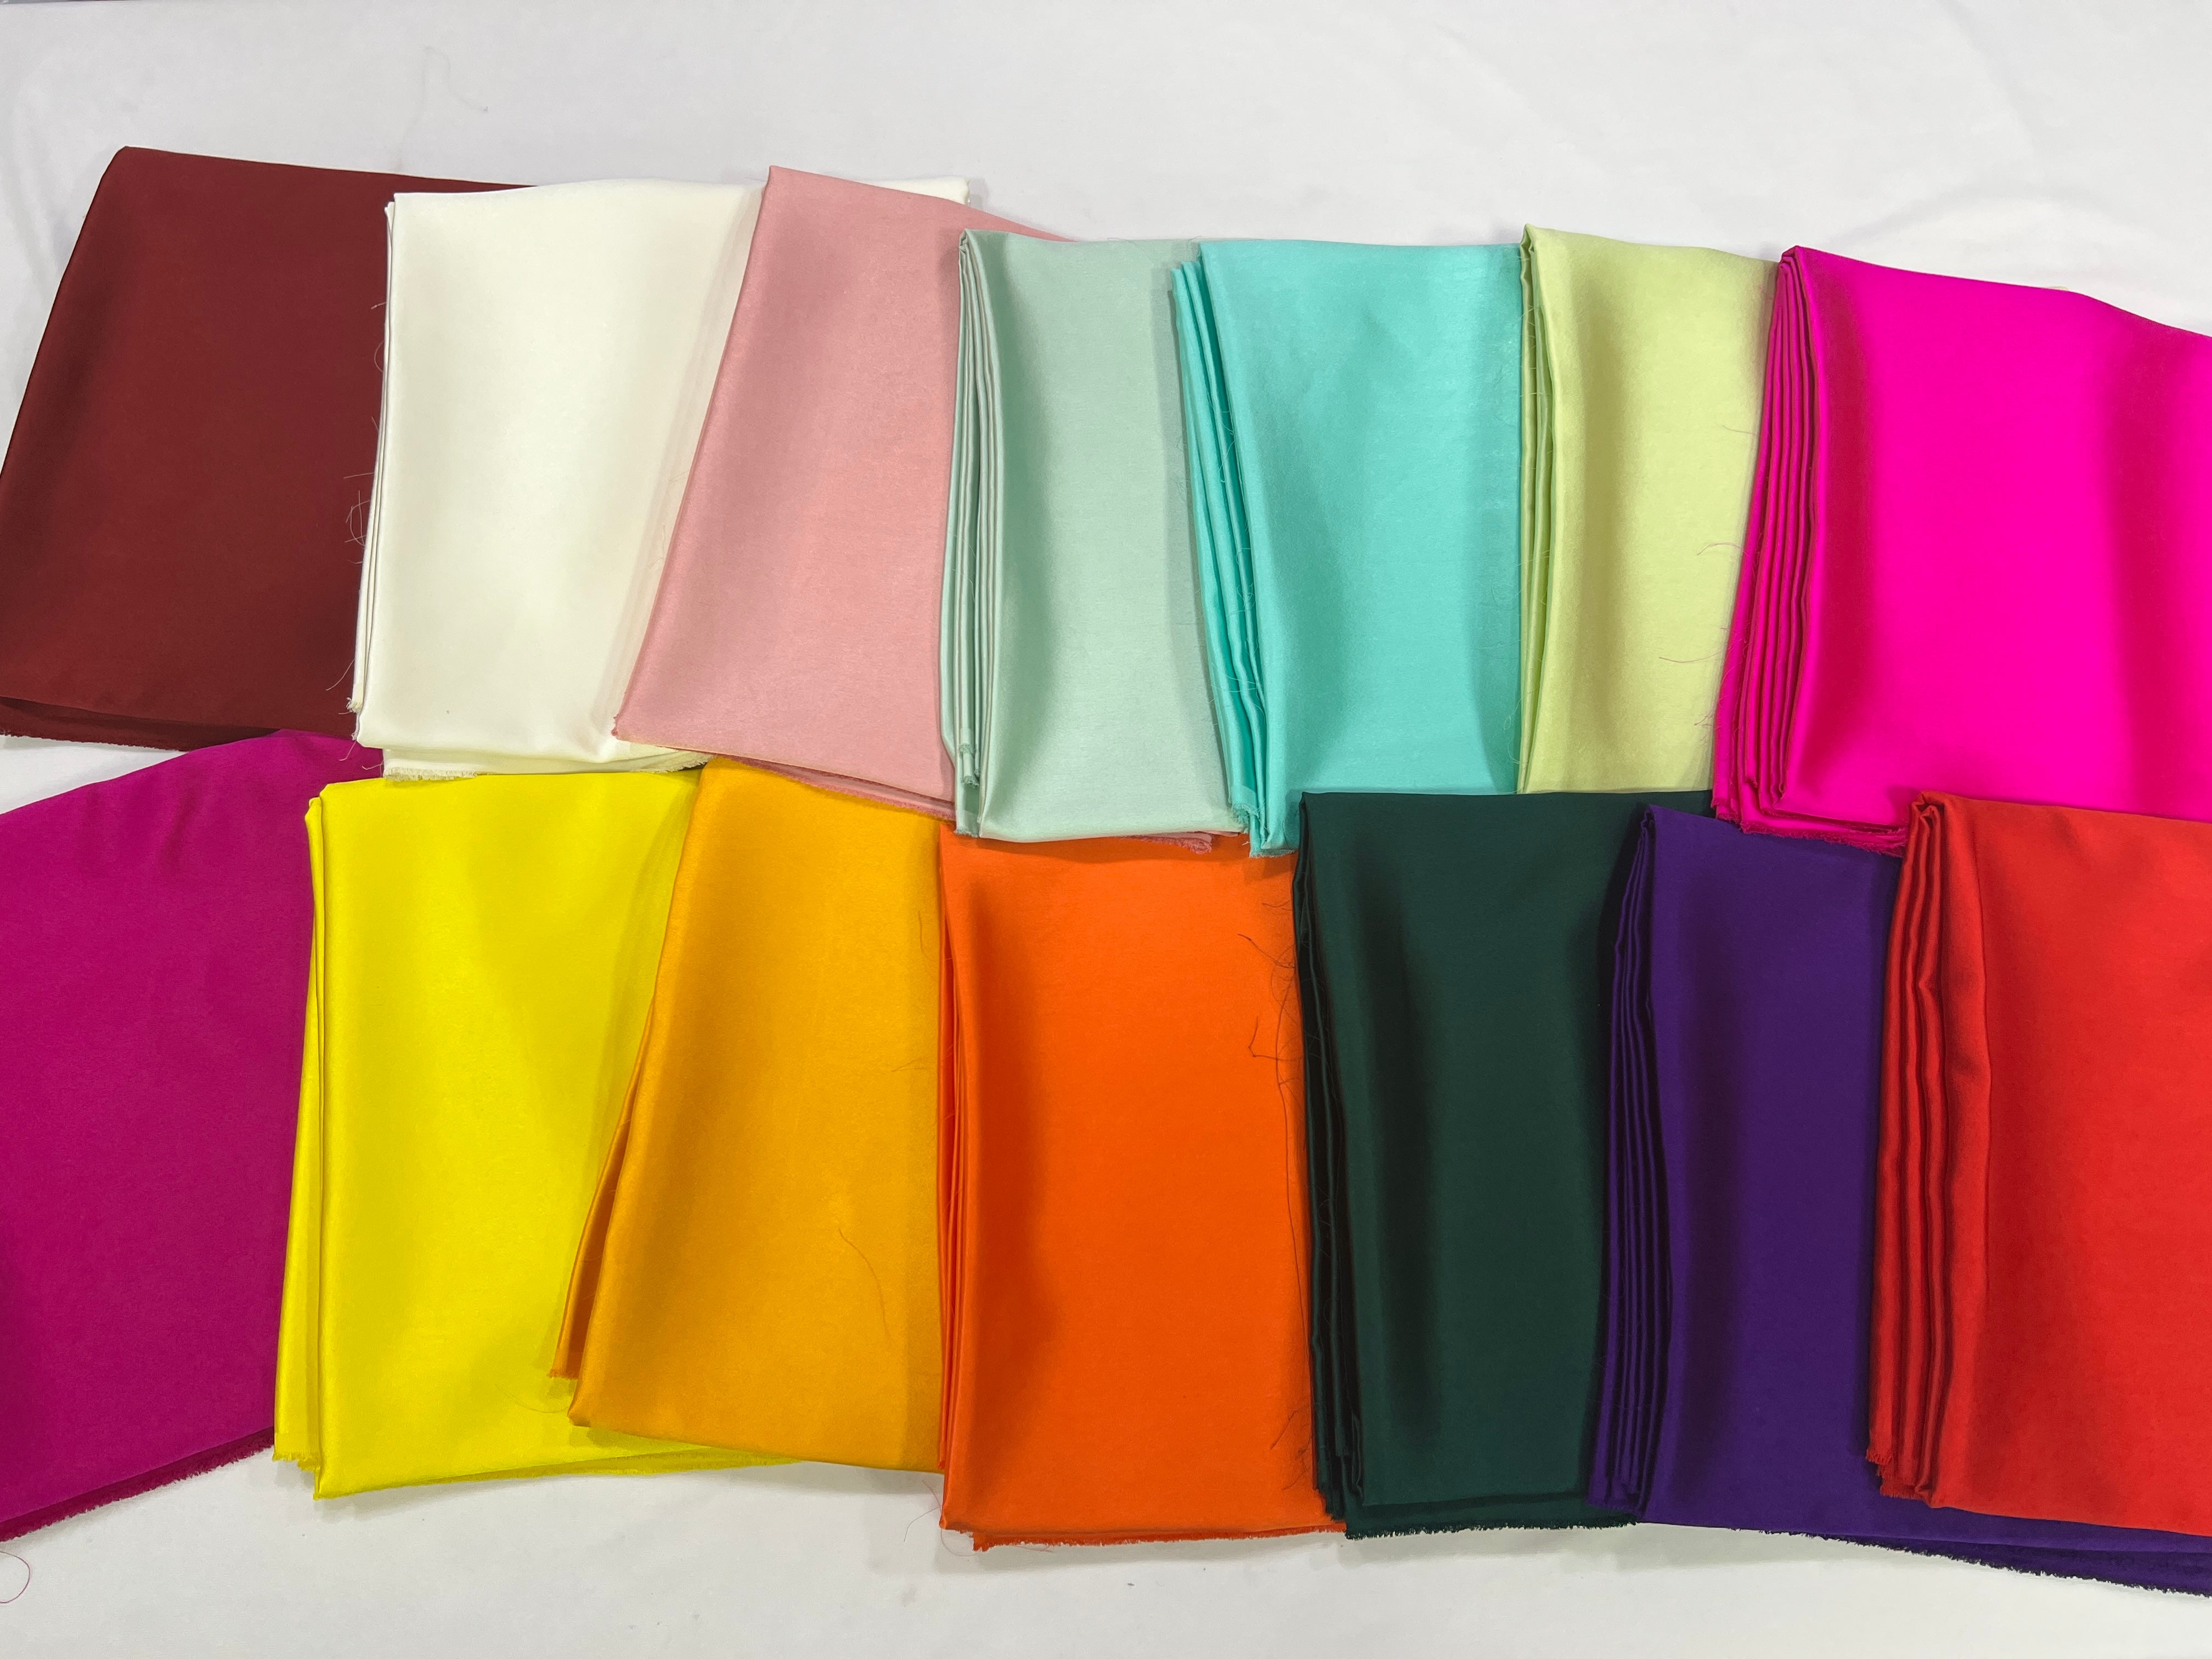 Silk Satin Fabric: 100% Silk Fabrics from Italy, SKU 00056125 at $69 — Buy  Silk Fabrics Online